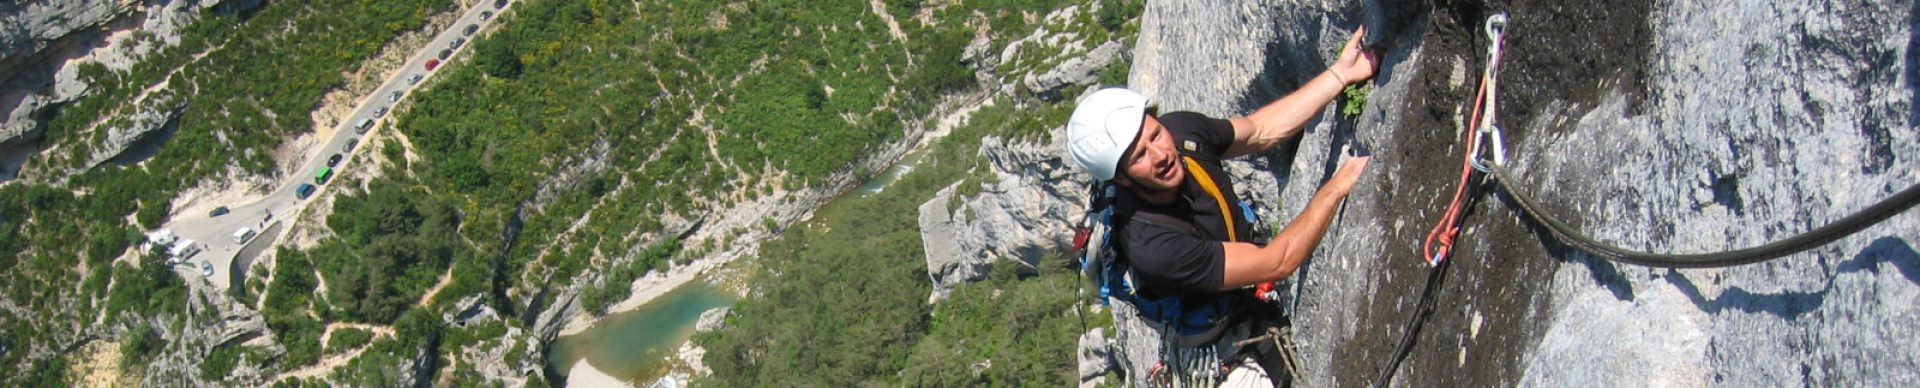 Climbing - Rope up in Gorges du Verdon ©Lionel